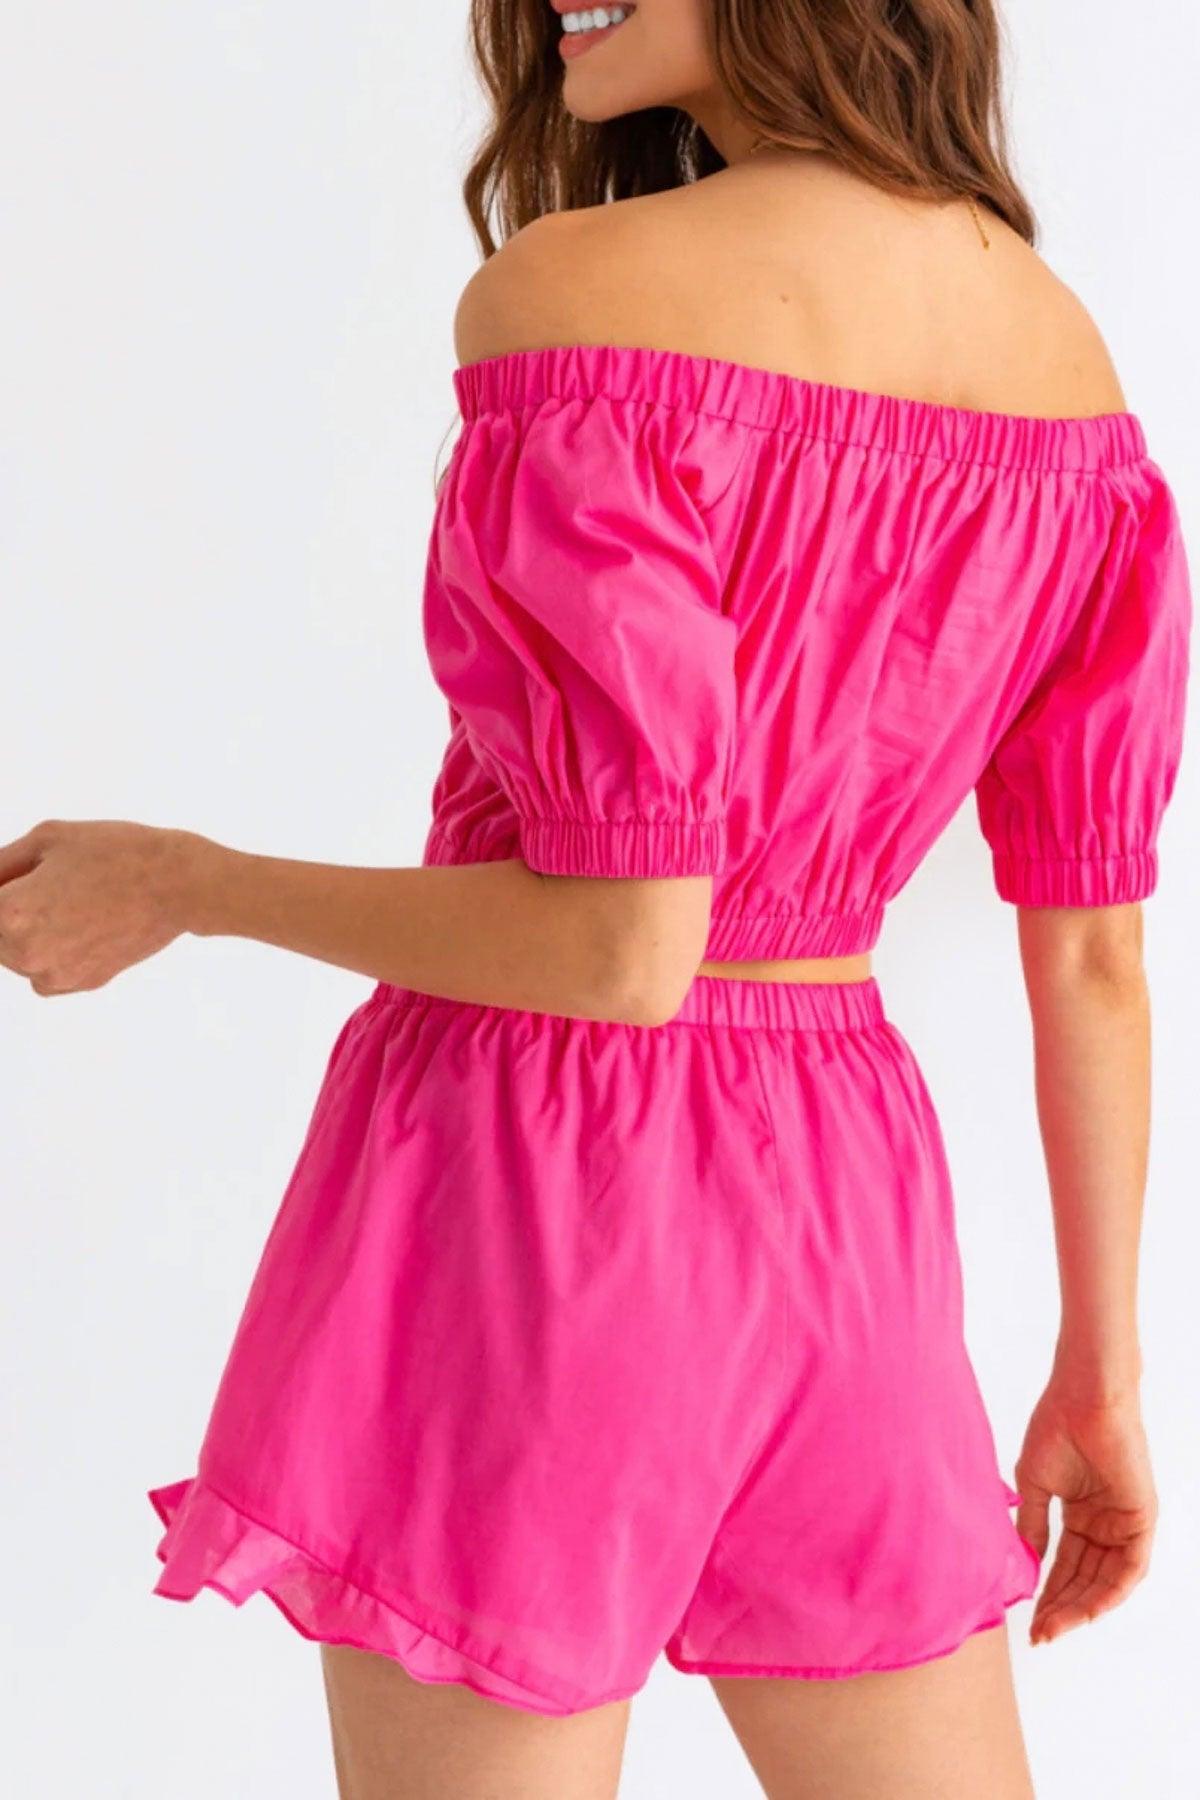 Hot Pink Off Shoulder Crop Top Ruffle Shorts Set - Tasha Apparel Wholesale